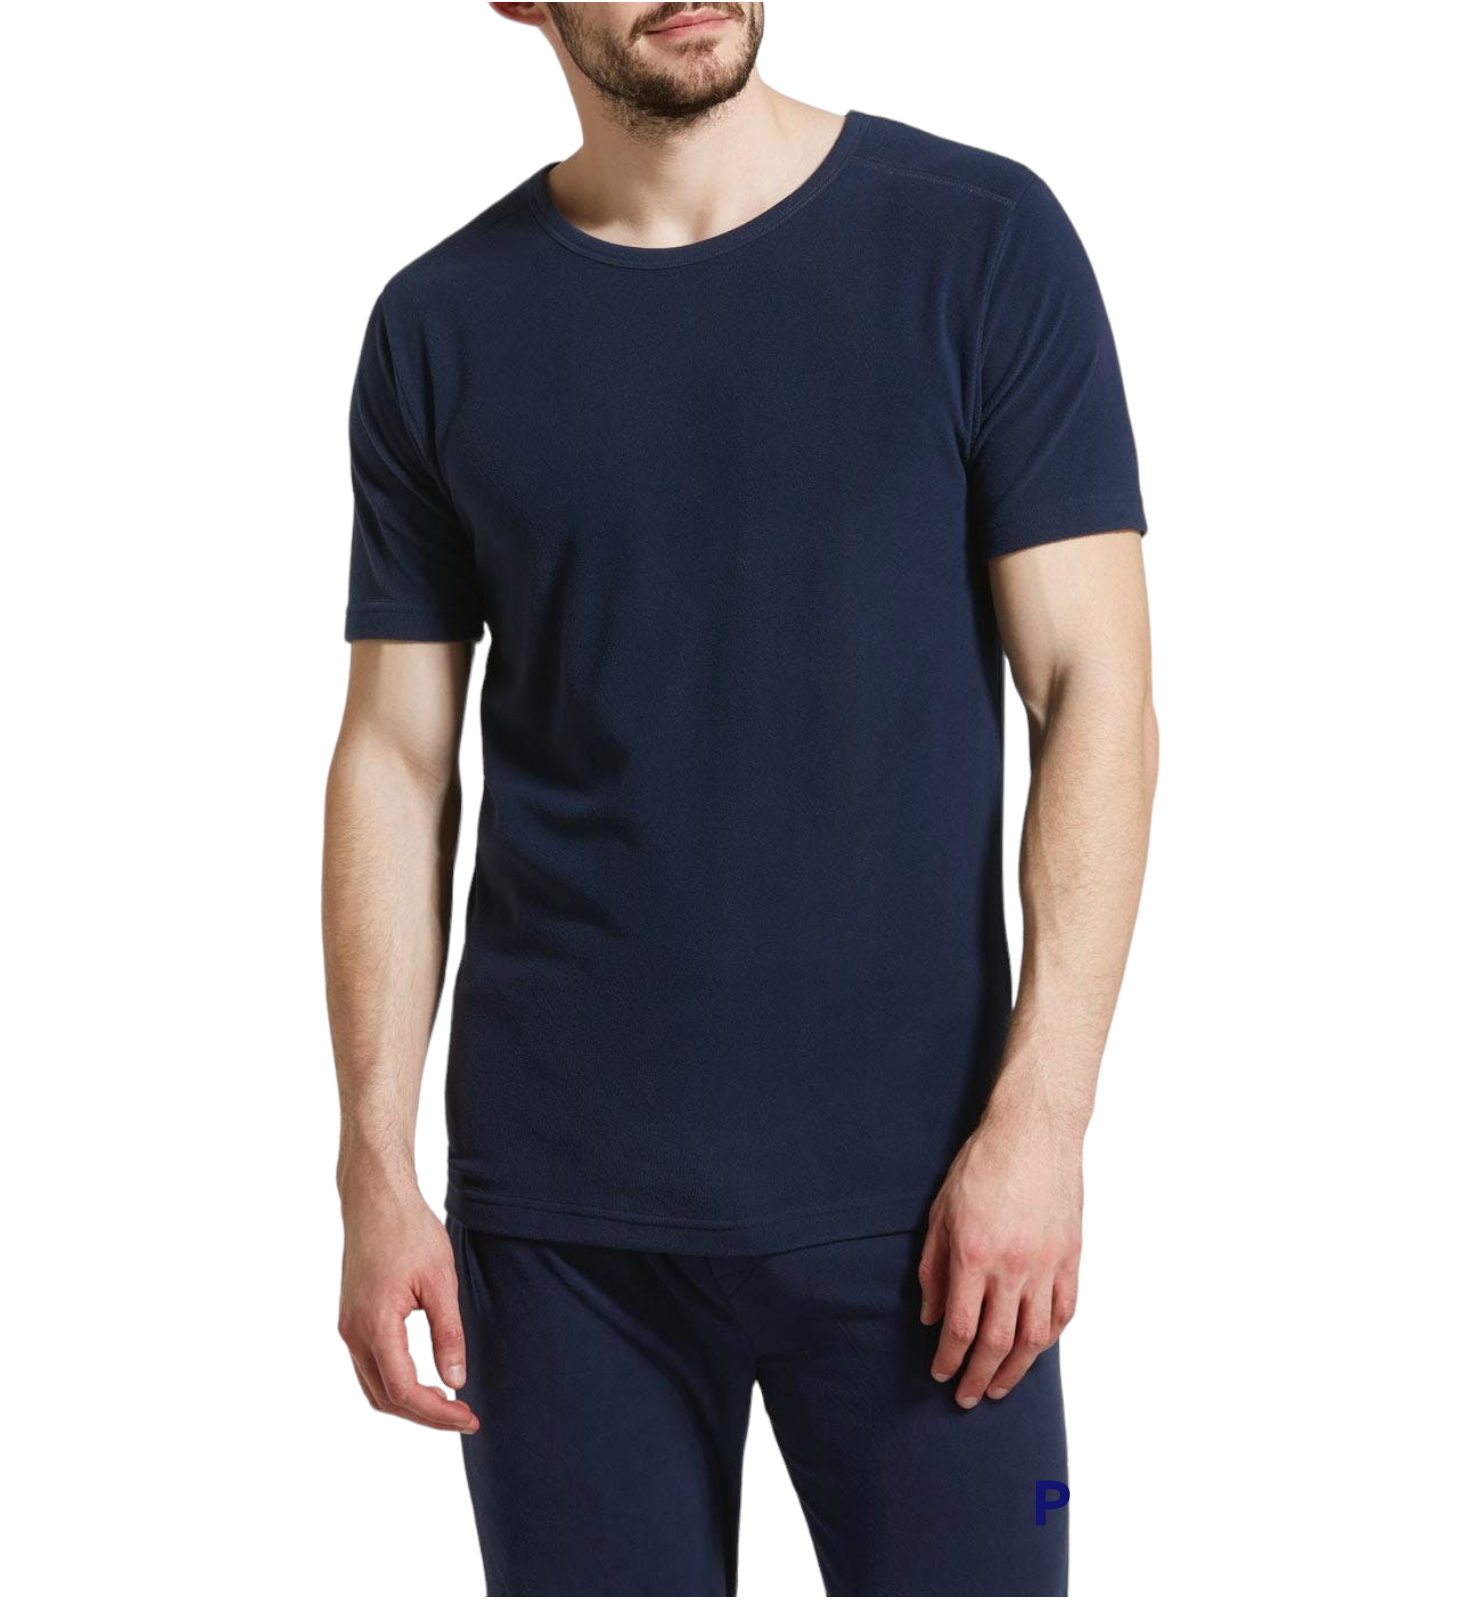 Mens Thermal Short Sleeve Top Microfleece Baselayer Underwear T Shirt - Navy - M